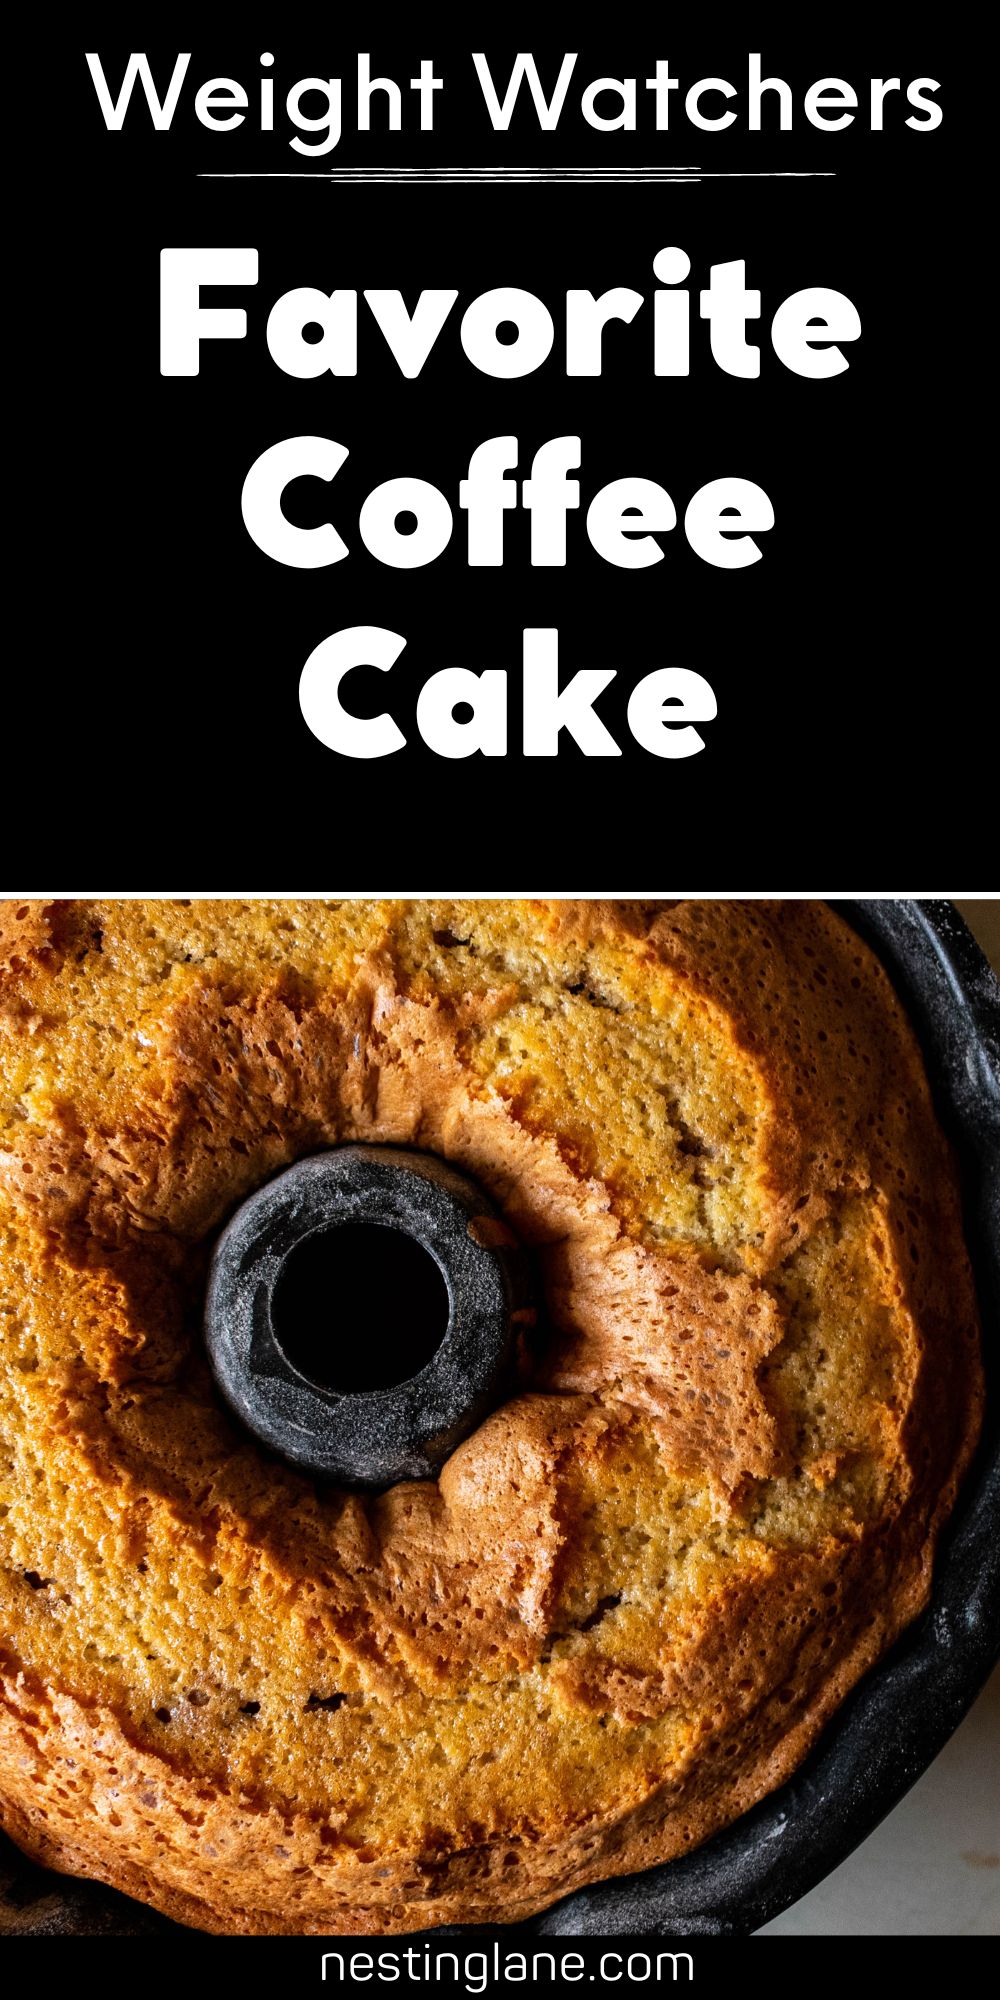 Favorite Coffee Cake graphic.